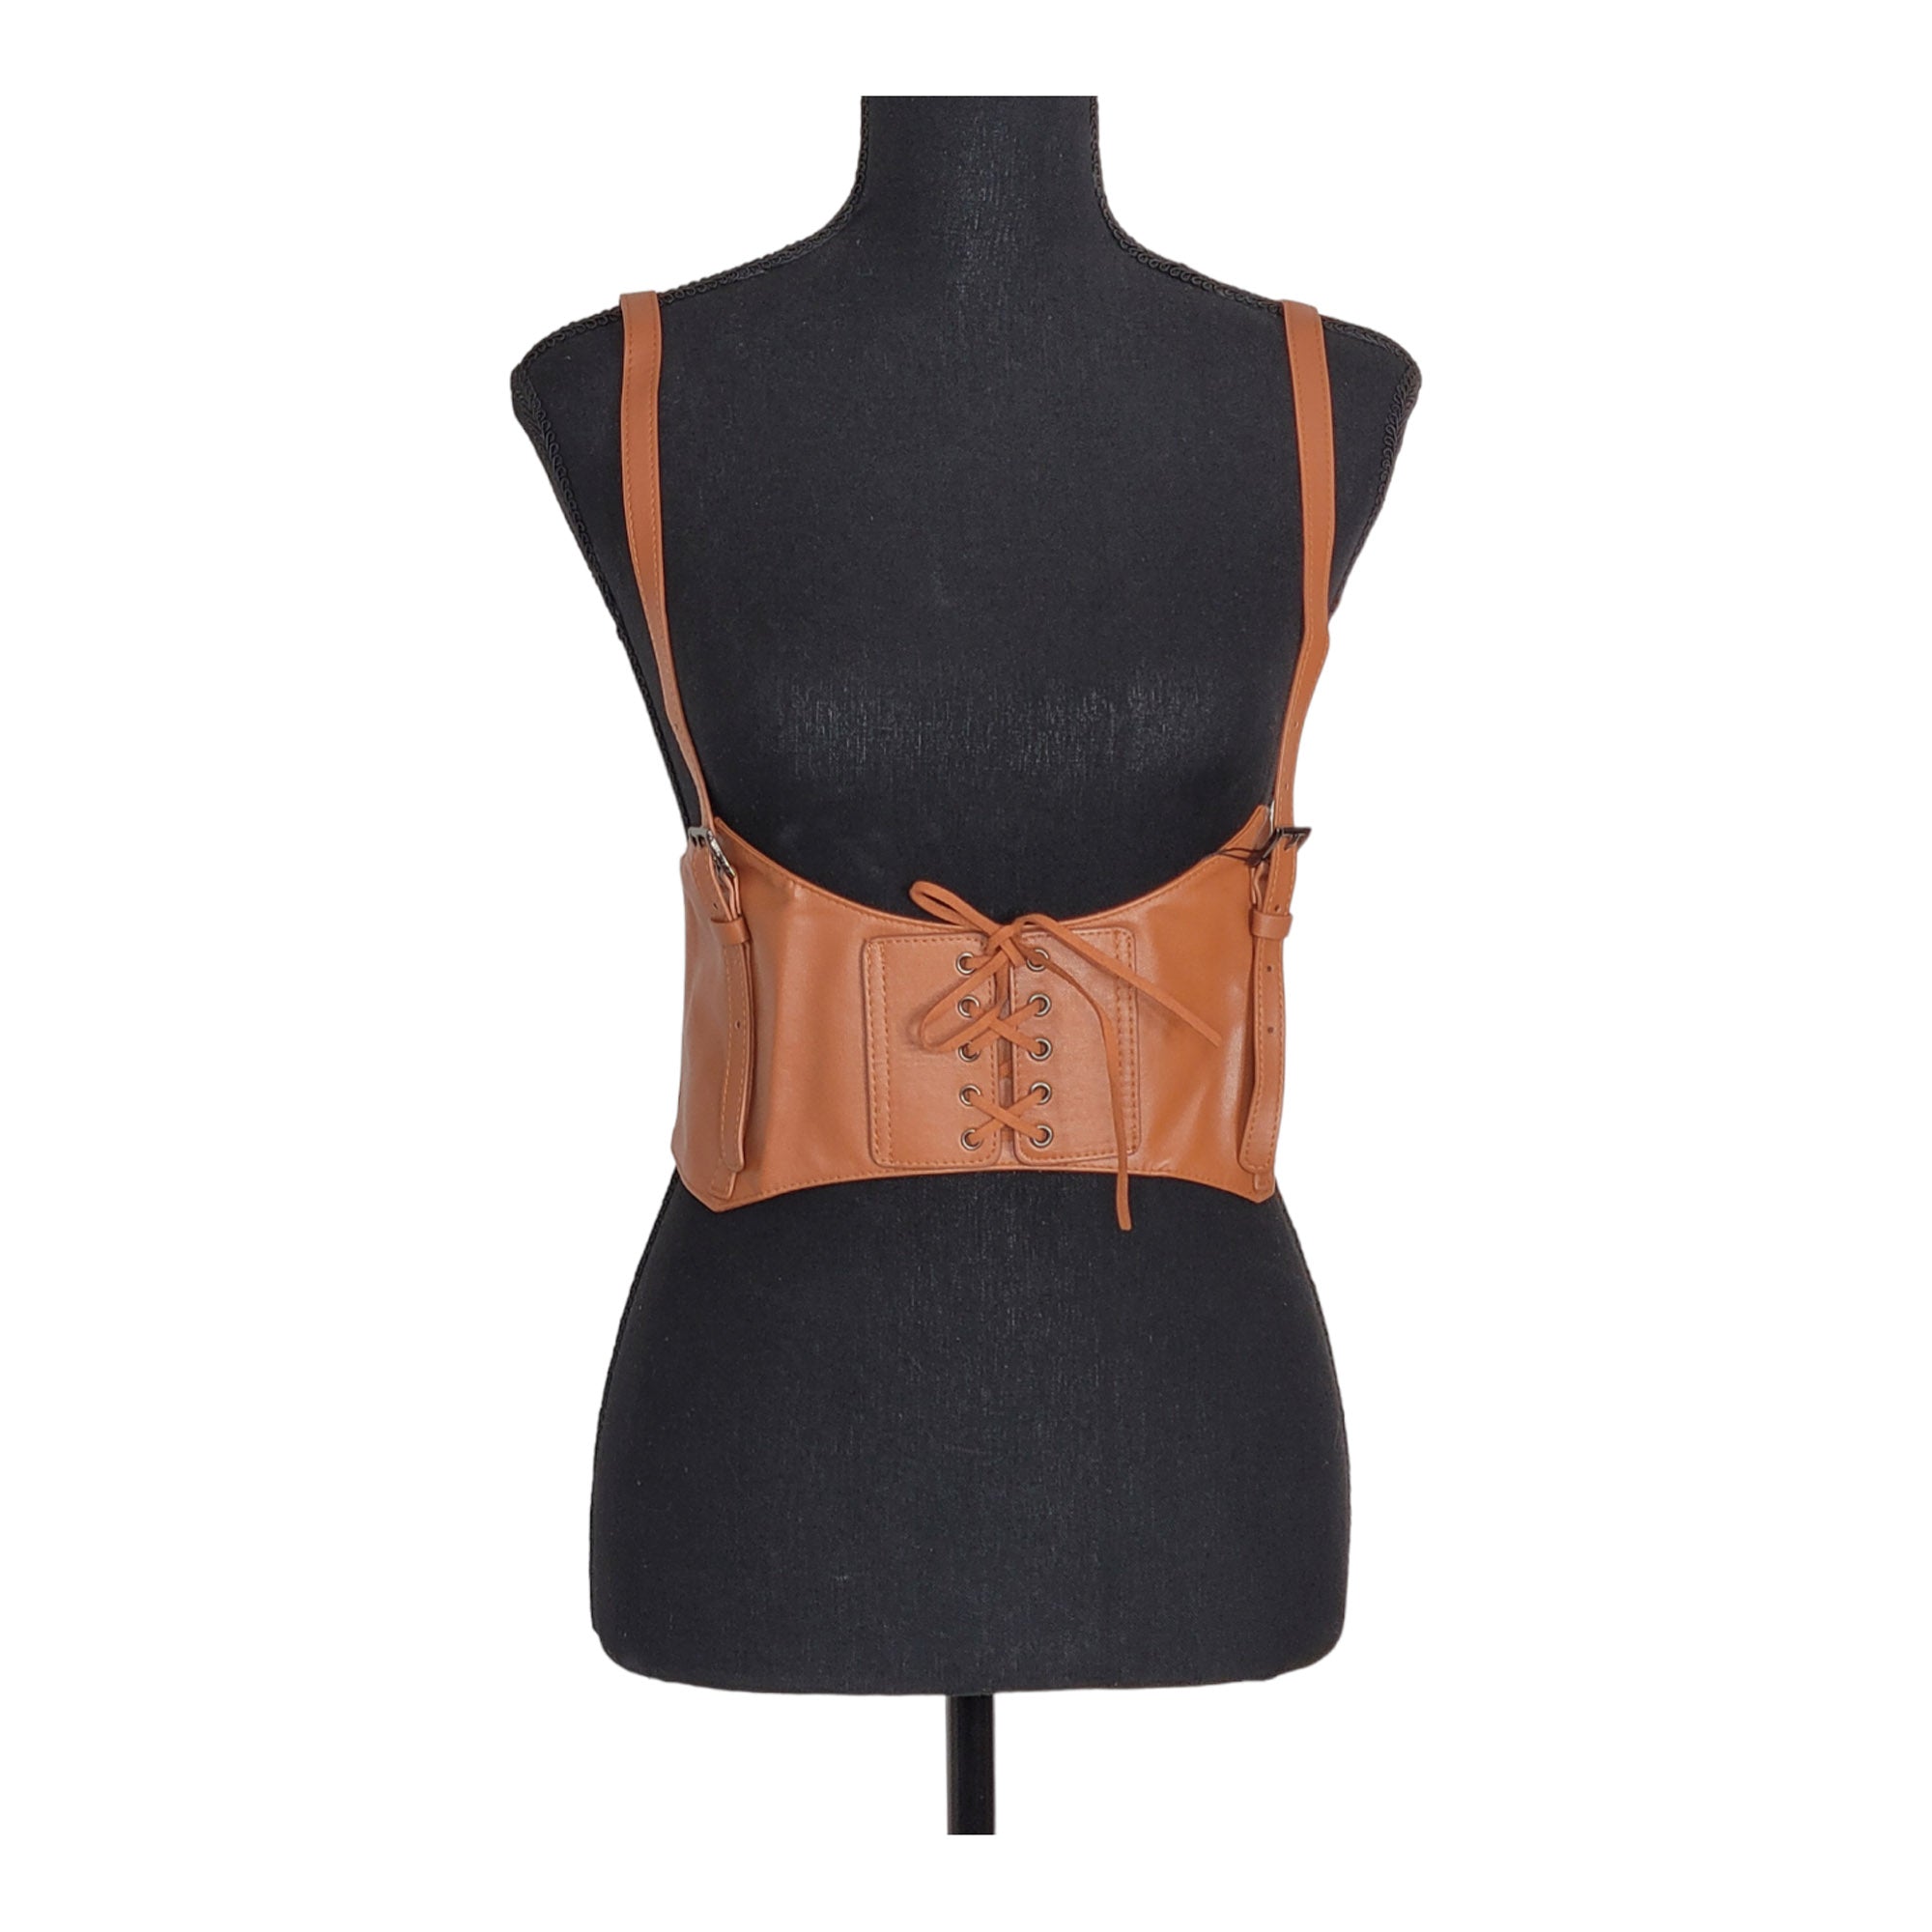 Adjustable PU Leather Underbust Suspender Corset Belt For Women